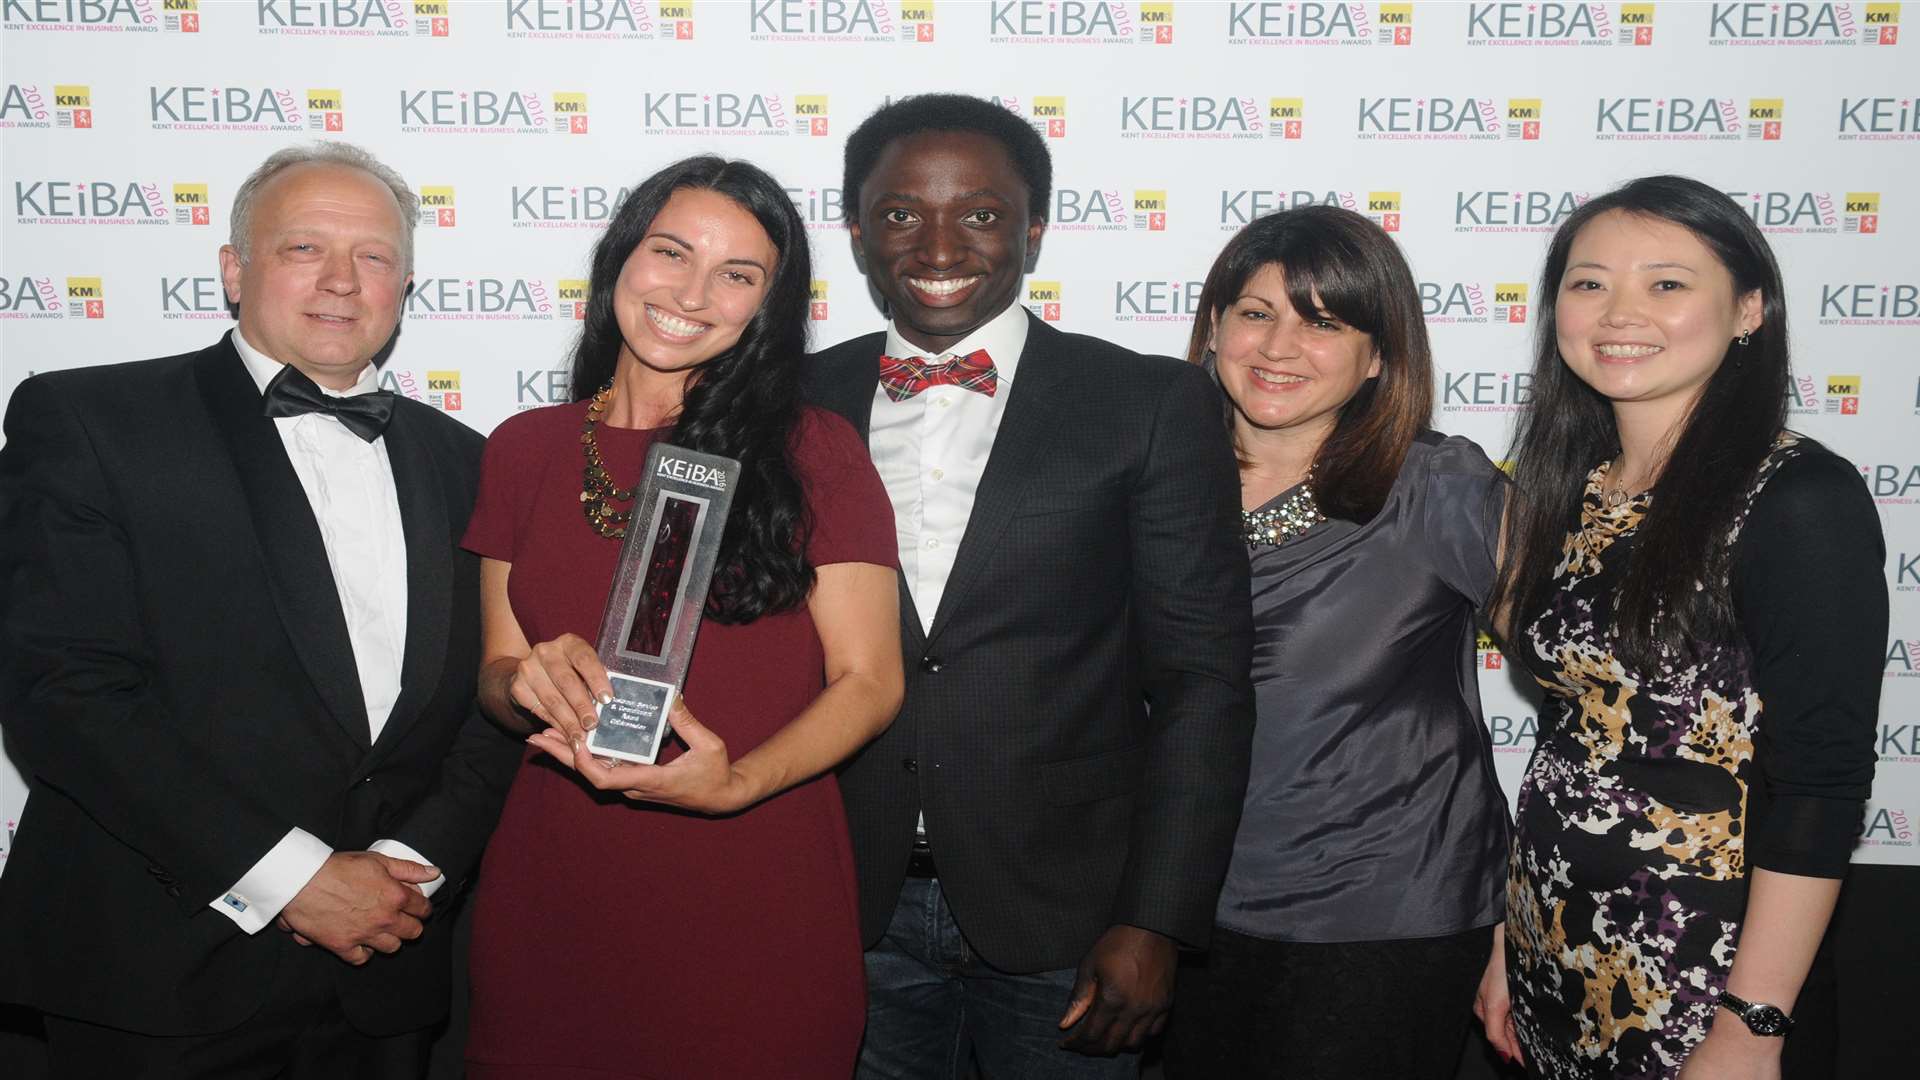 Winning at KEiBA, from left, sponsor Roger Pitt with Childrensalon staff Affie Scott-Read, Hassan Luwalira, Denise Hamilton and Mel Ng